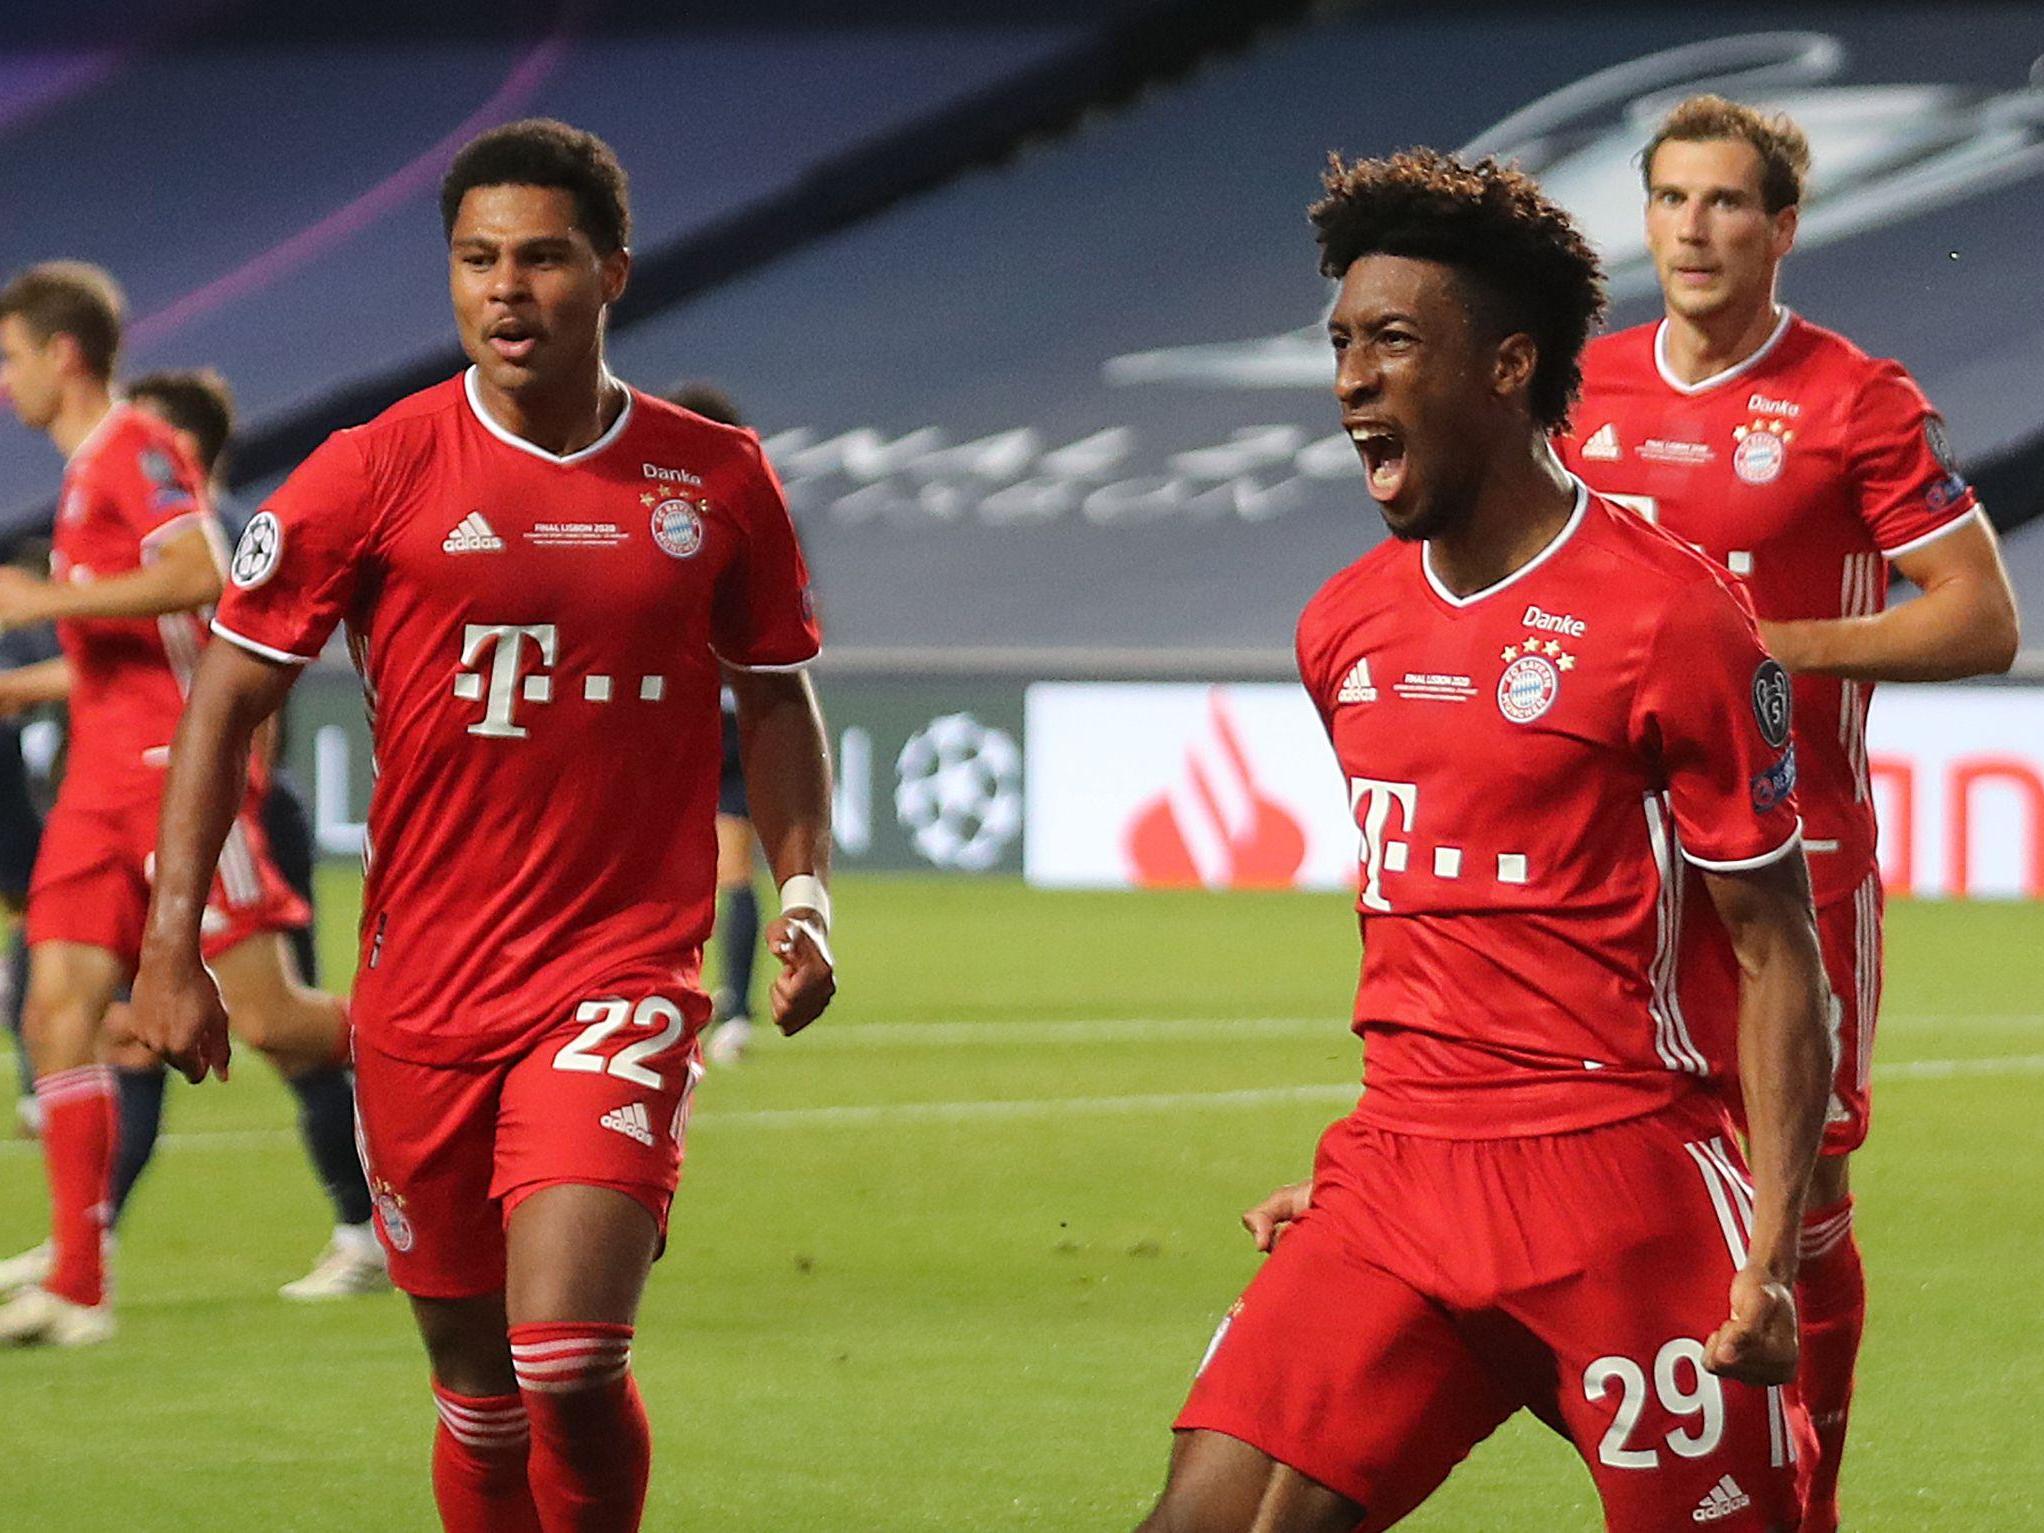 Bayern Munich's Kingsley Coman celebrates scoring